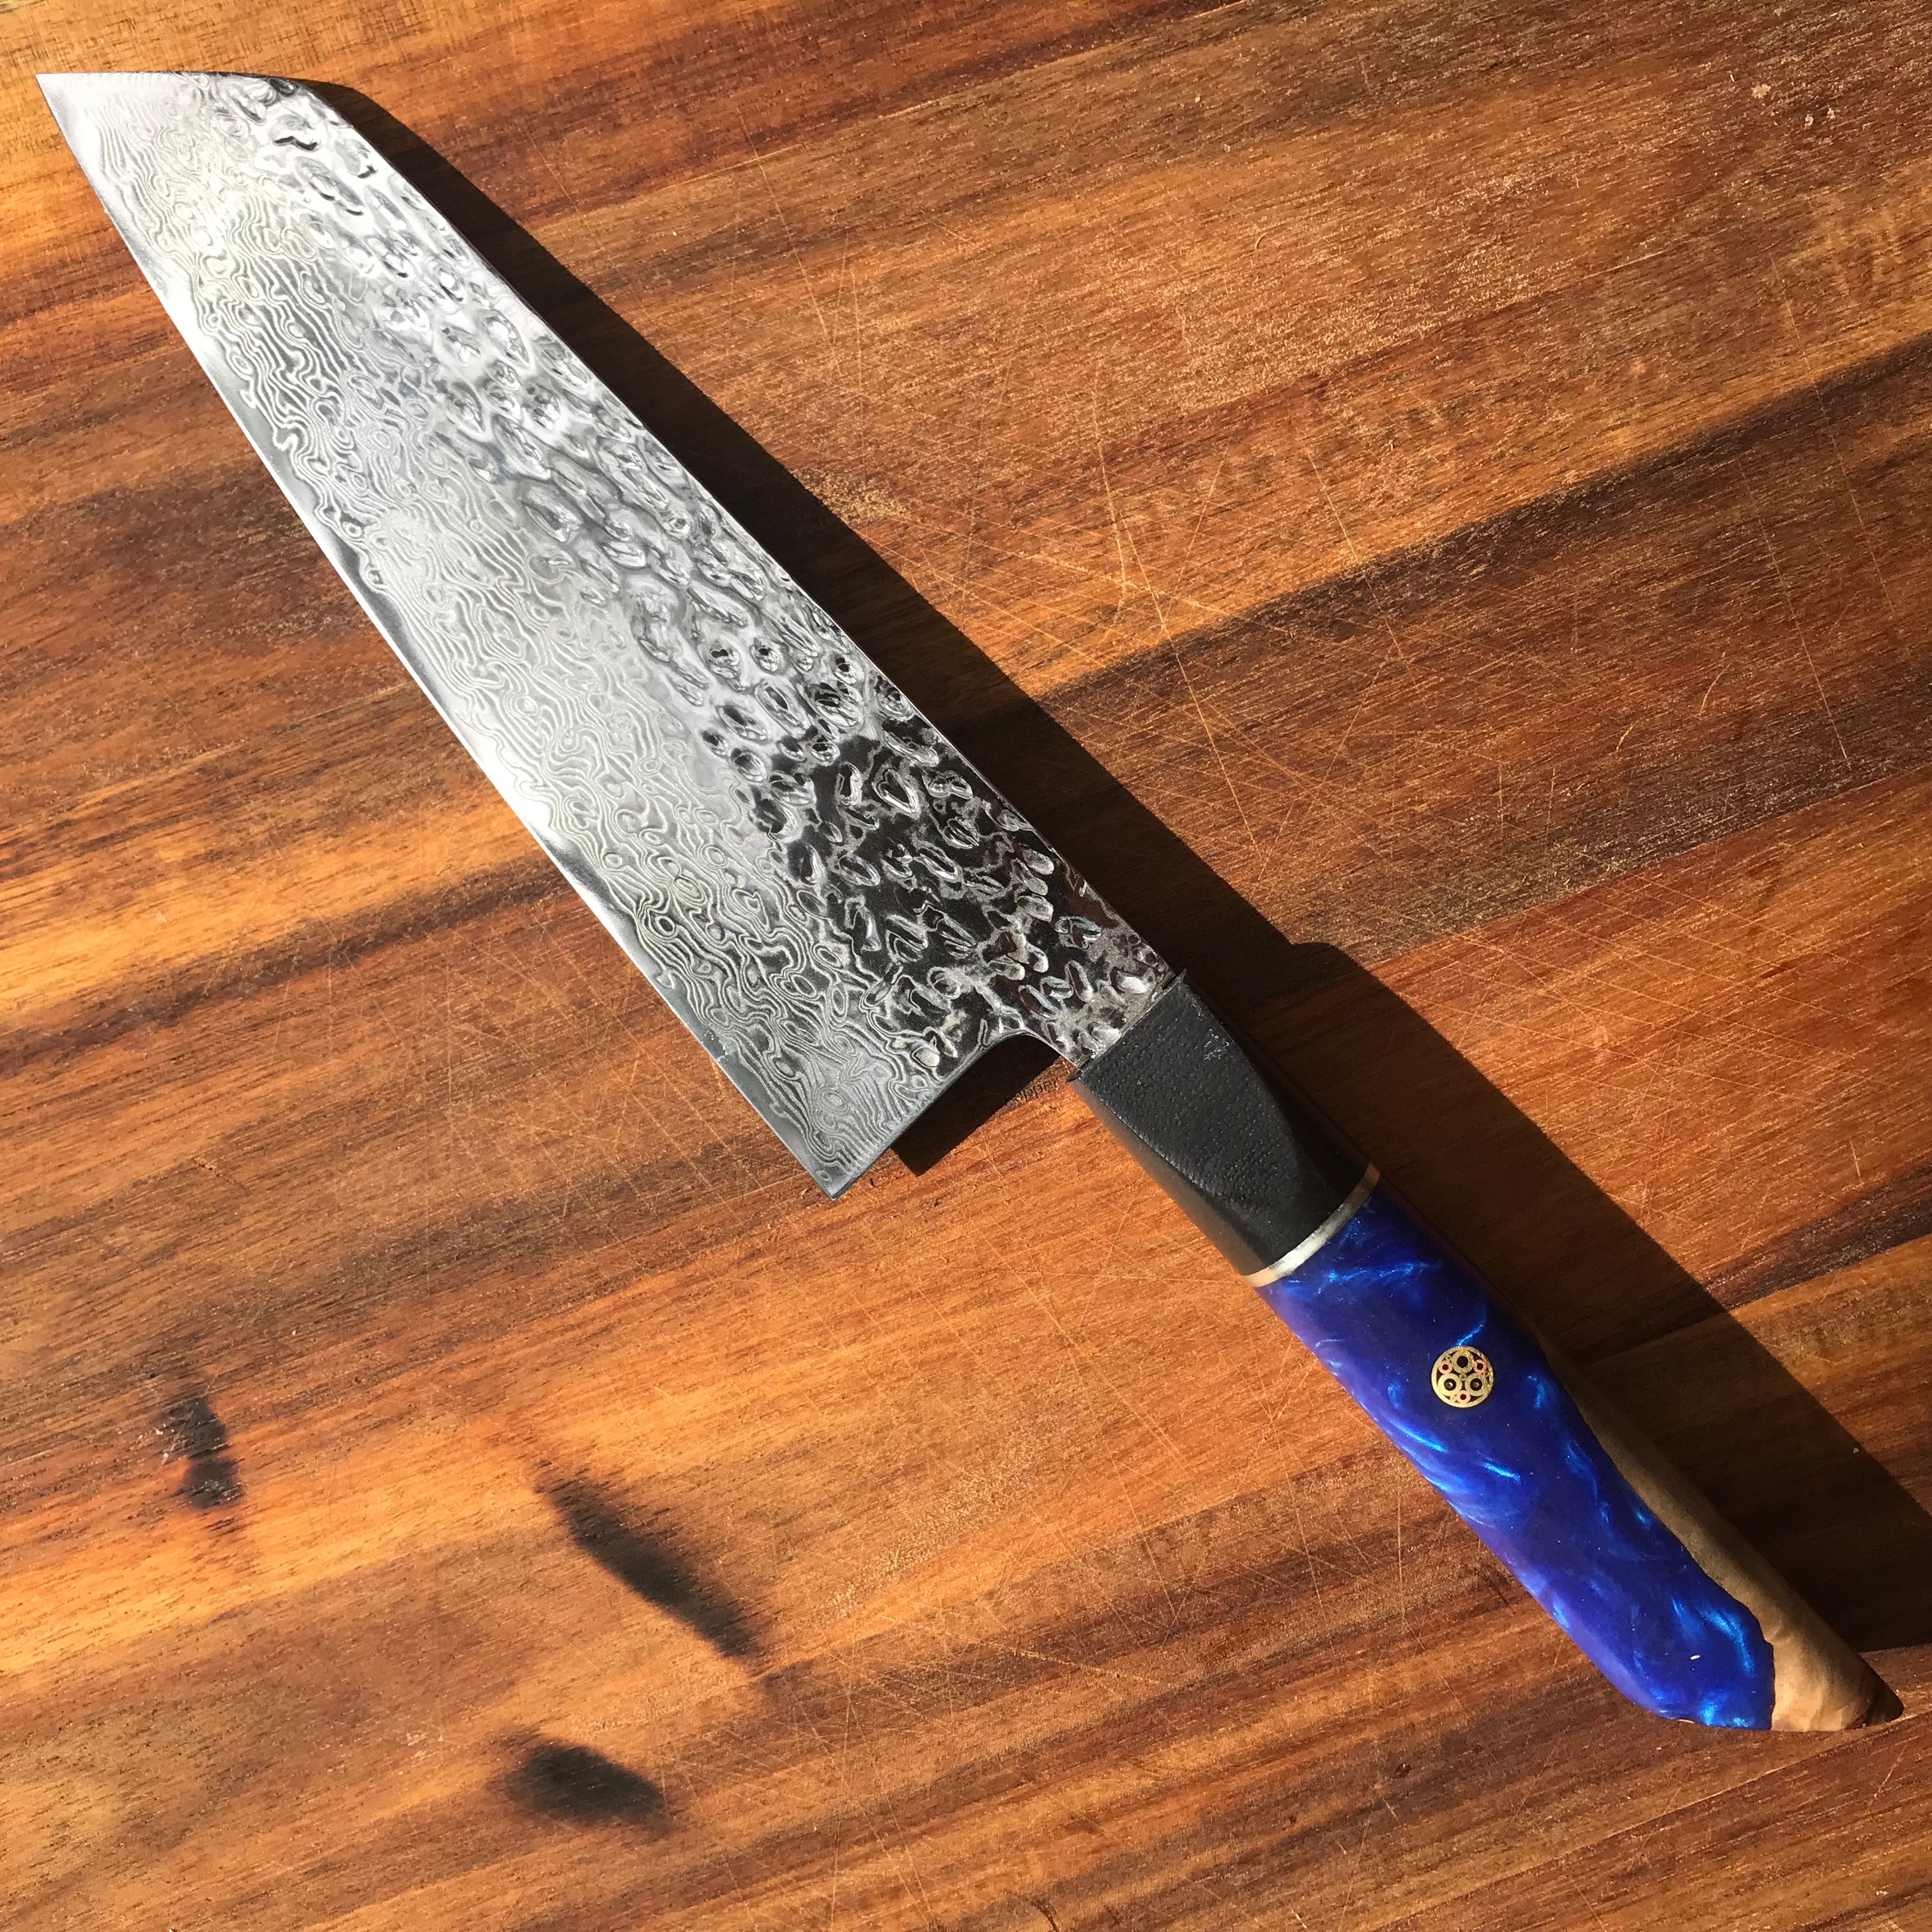 The Bunka Knife Anatomy Koi Knives